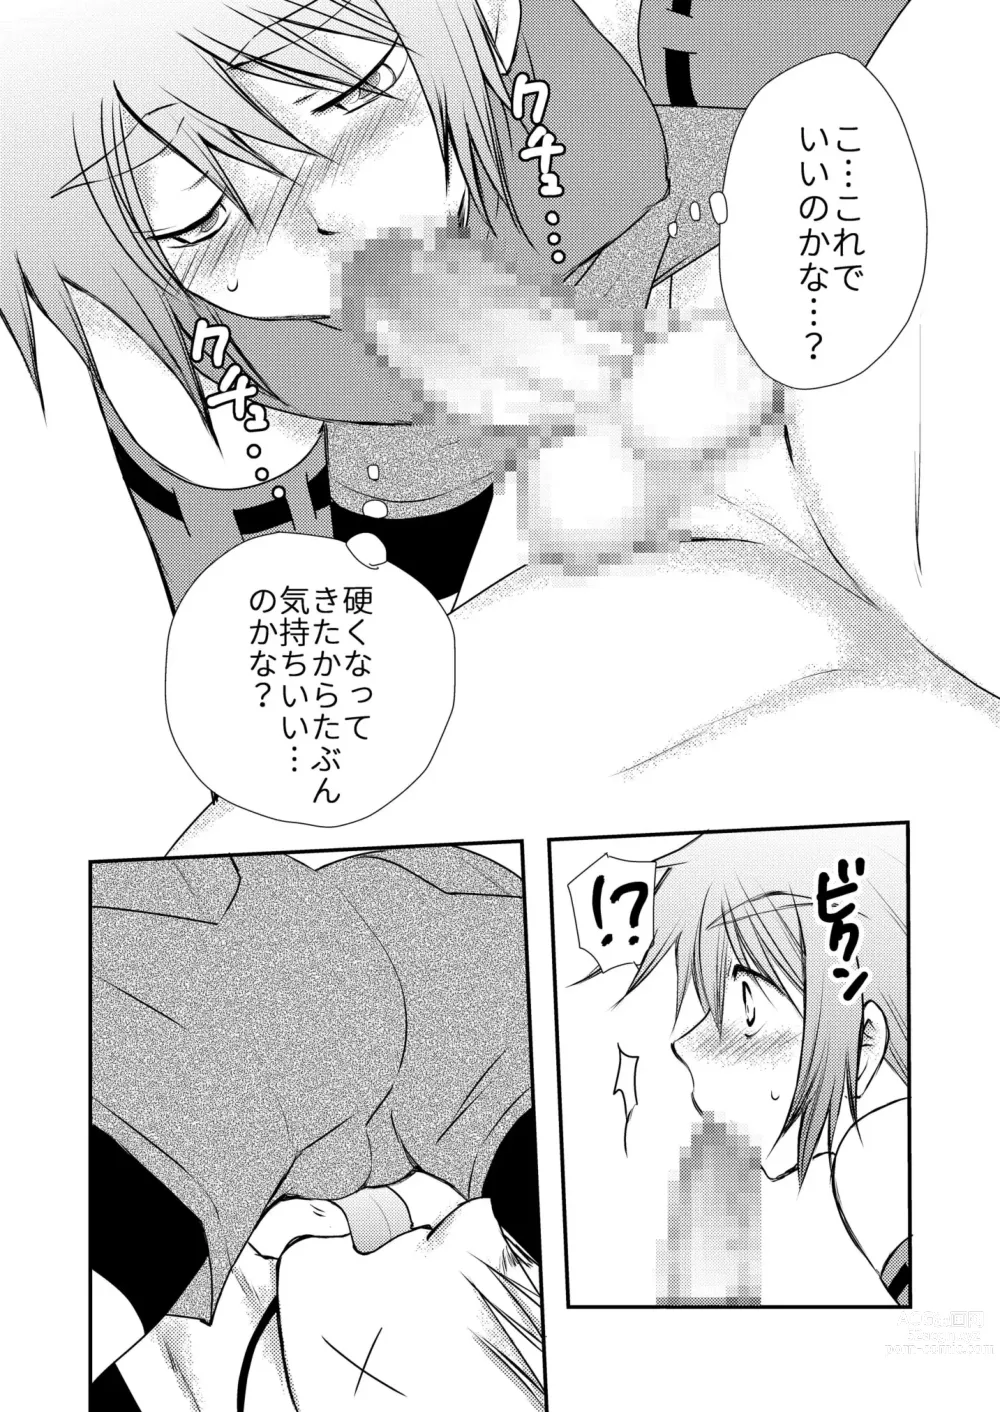 Page 60 of doujinshi Hajimete no Boukenki